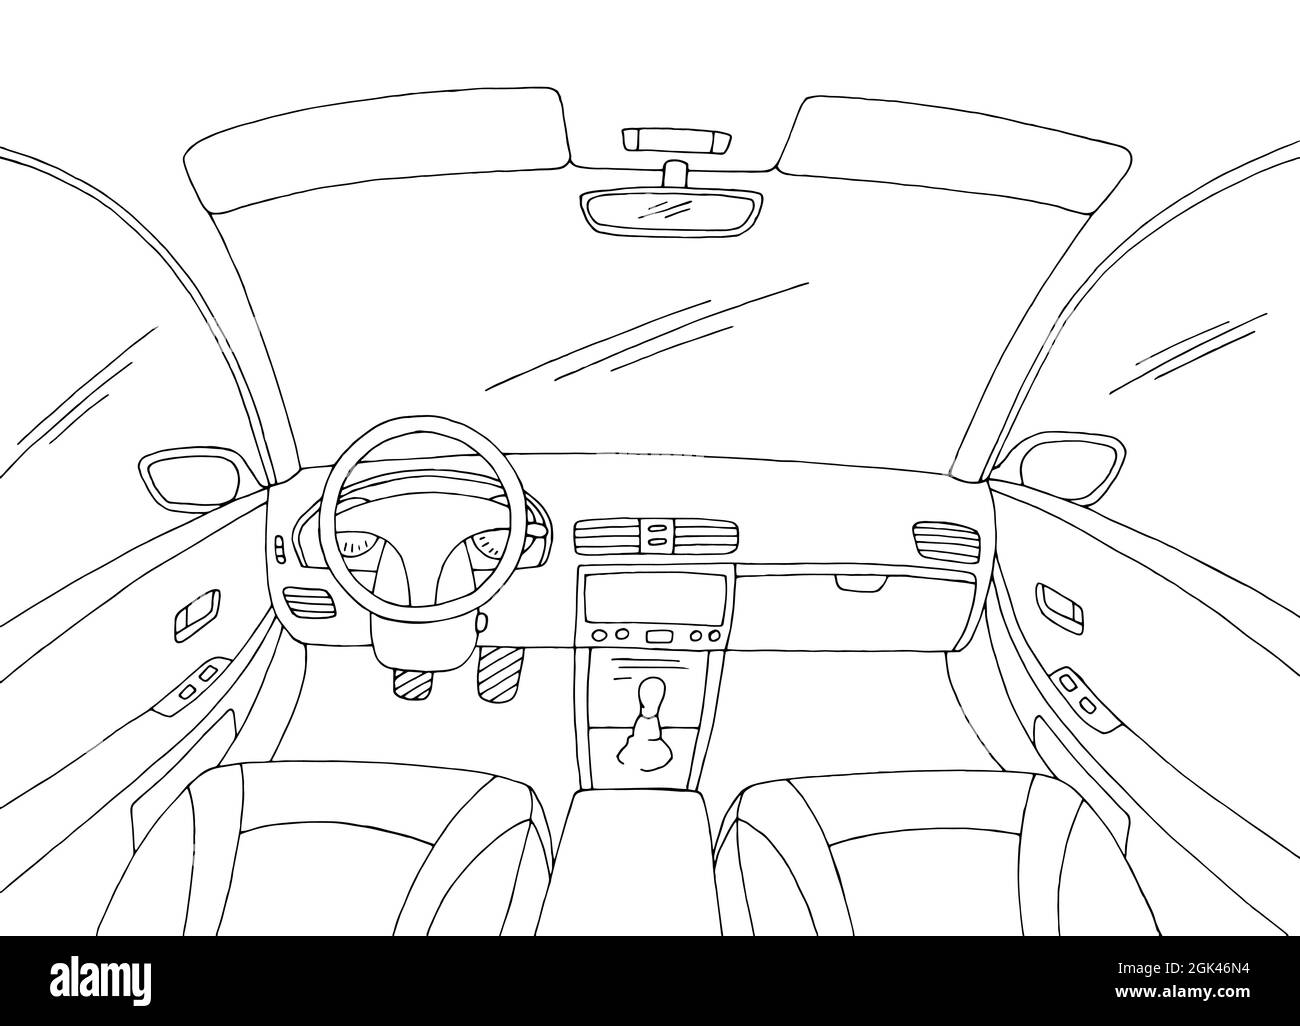 Hyundai Intrado Concept Interior Design Sketch  Car Body Design